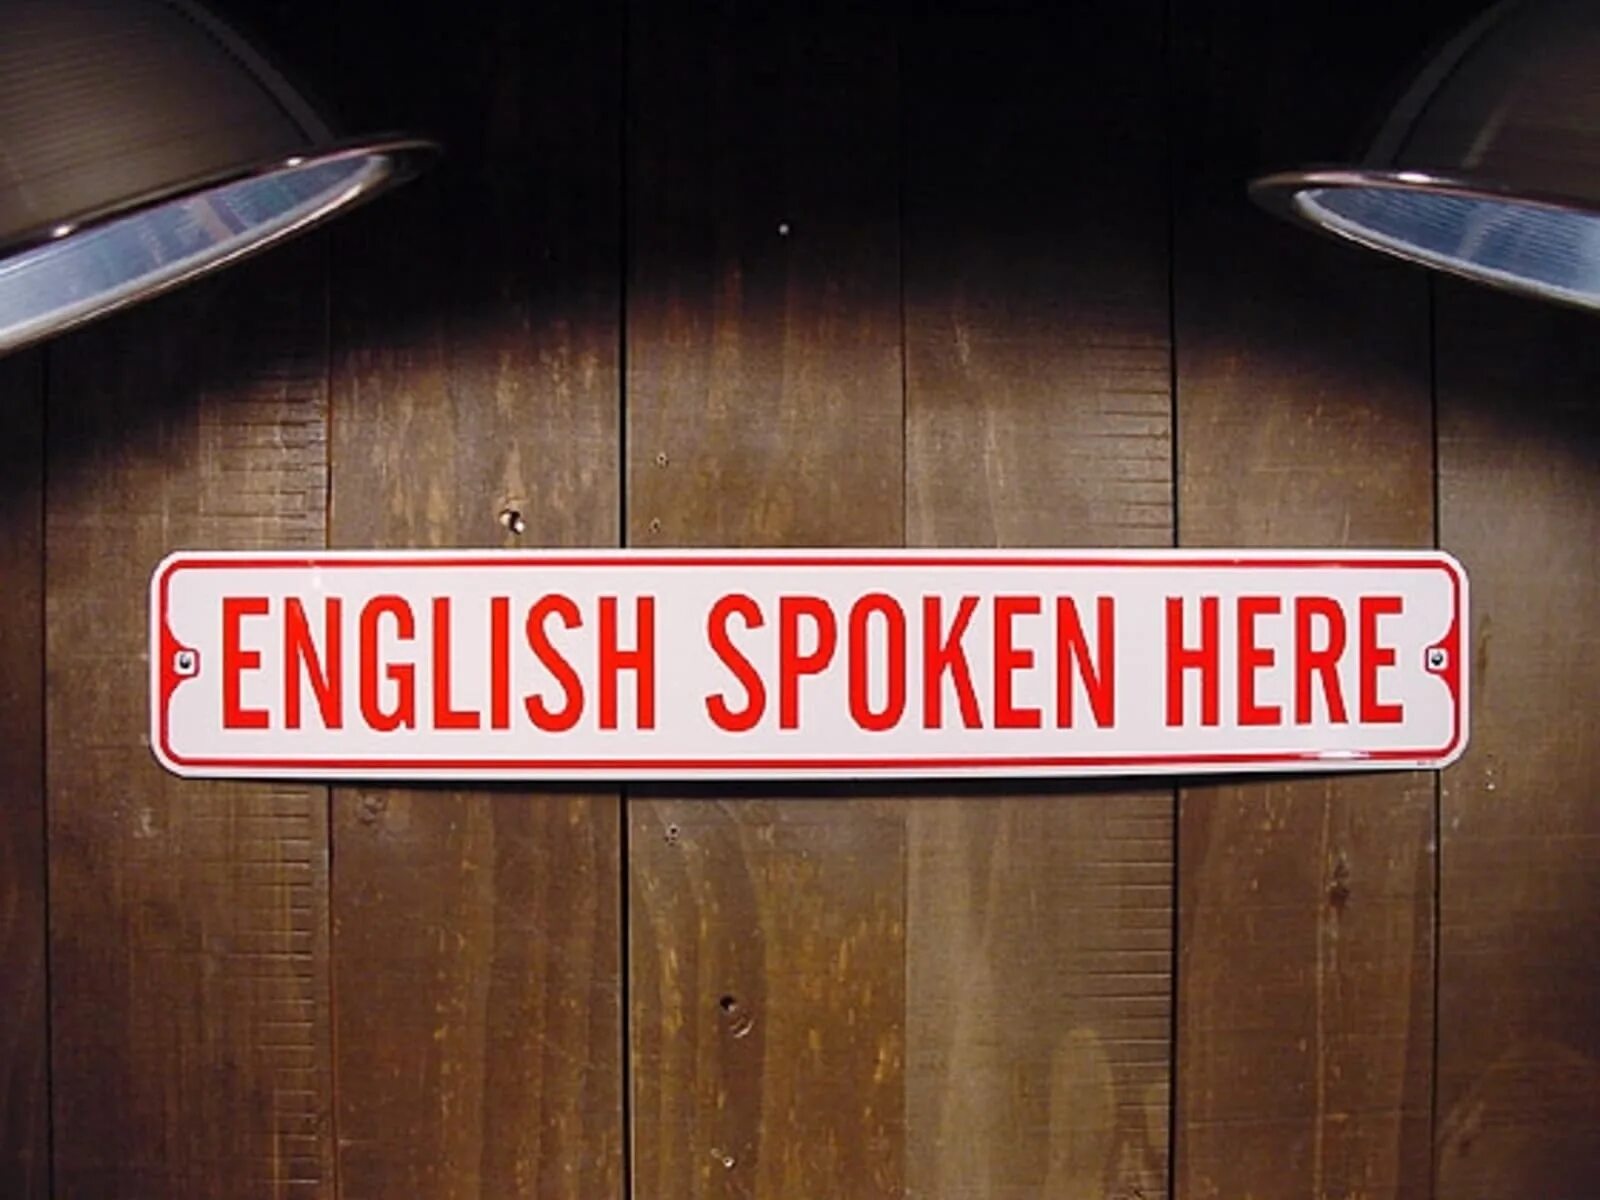 English Zone. Speak only English. English speaking Zone. English spoken here